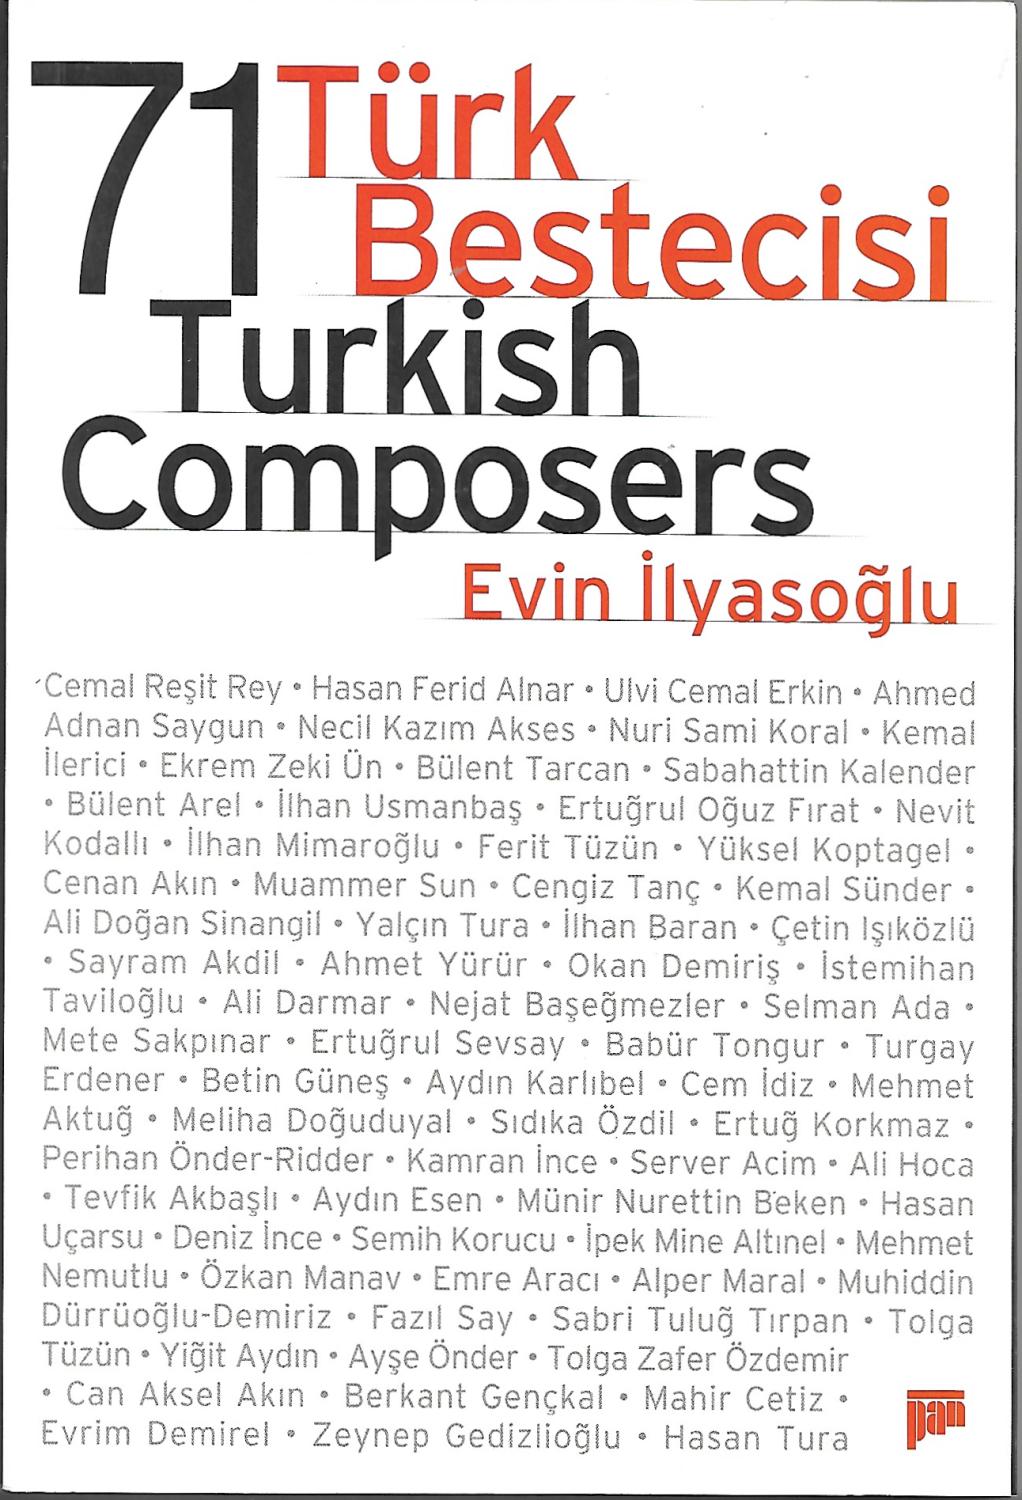 71 Turk Bestecisi / 71 Turkish Composers - Evin Ilyasoglu